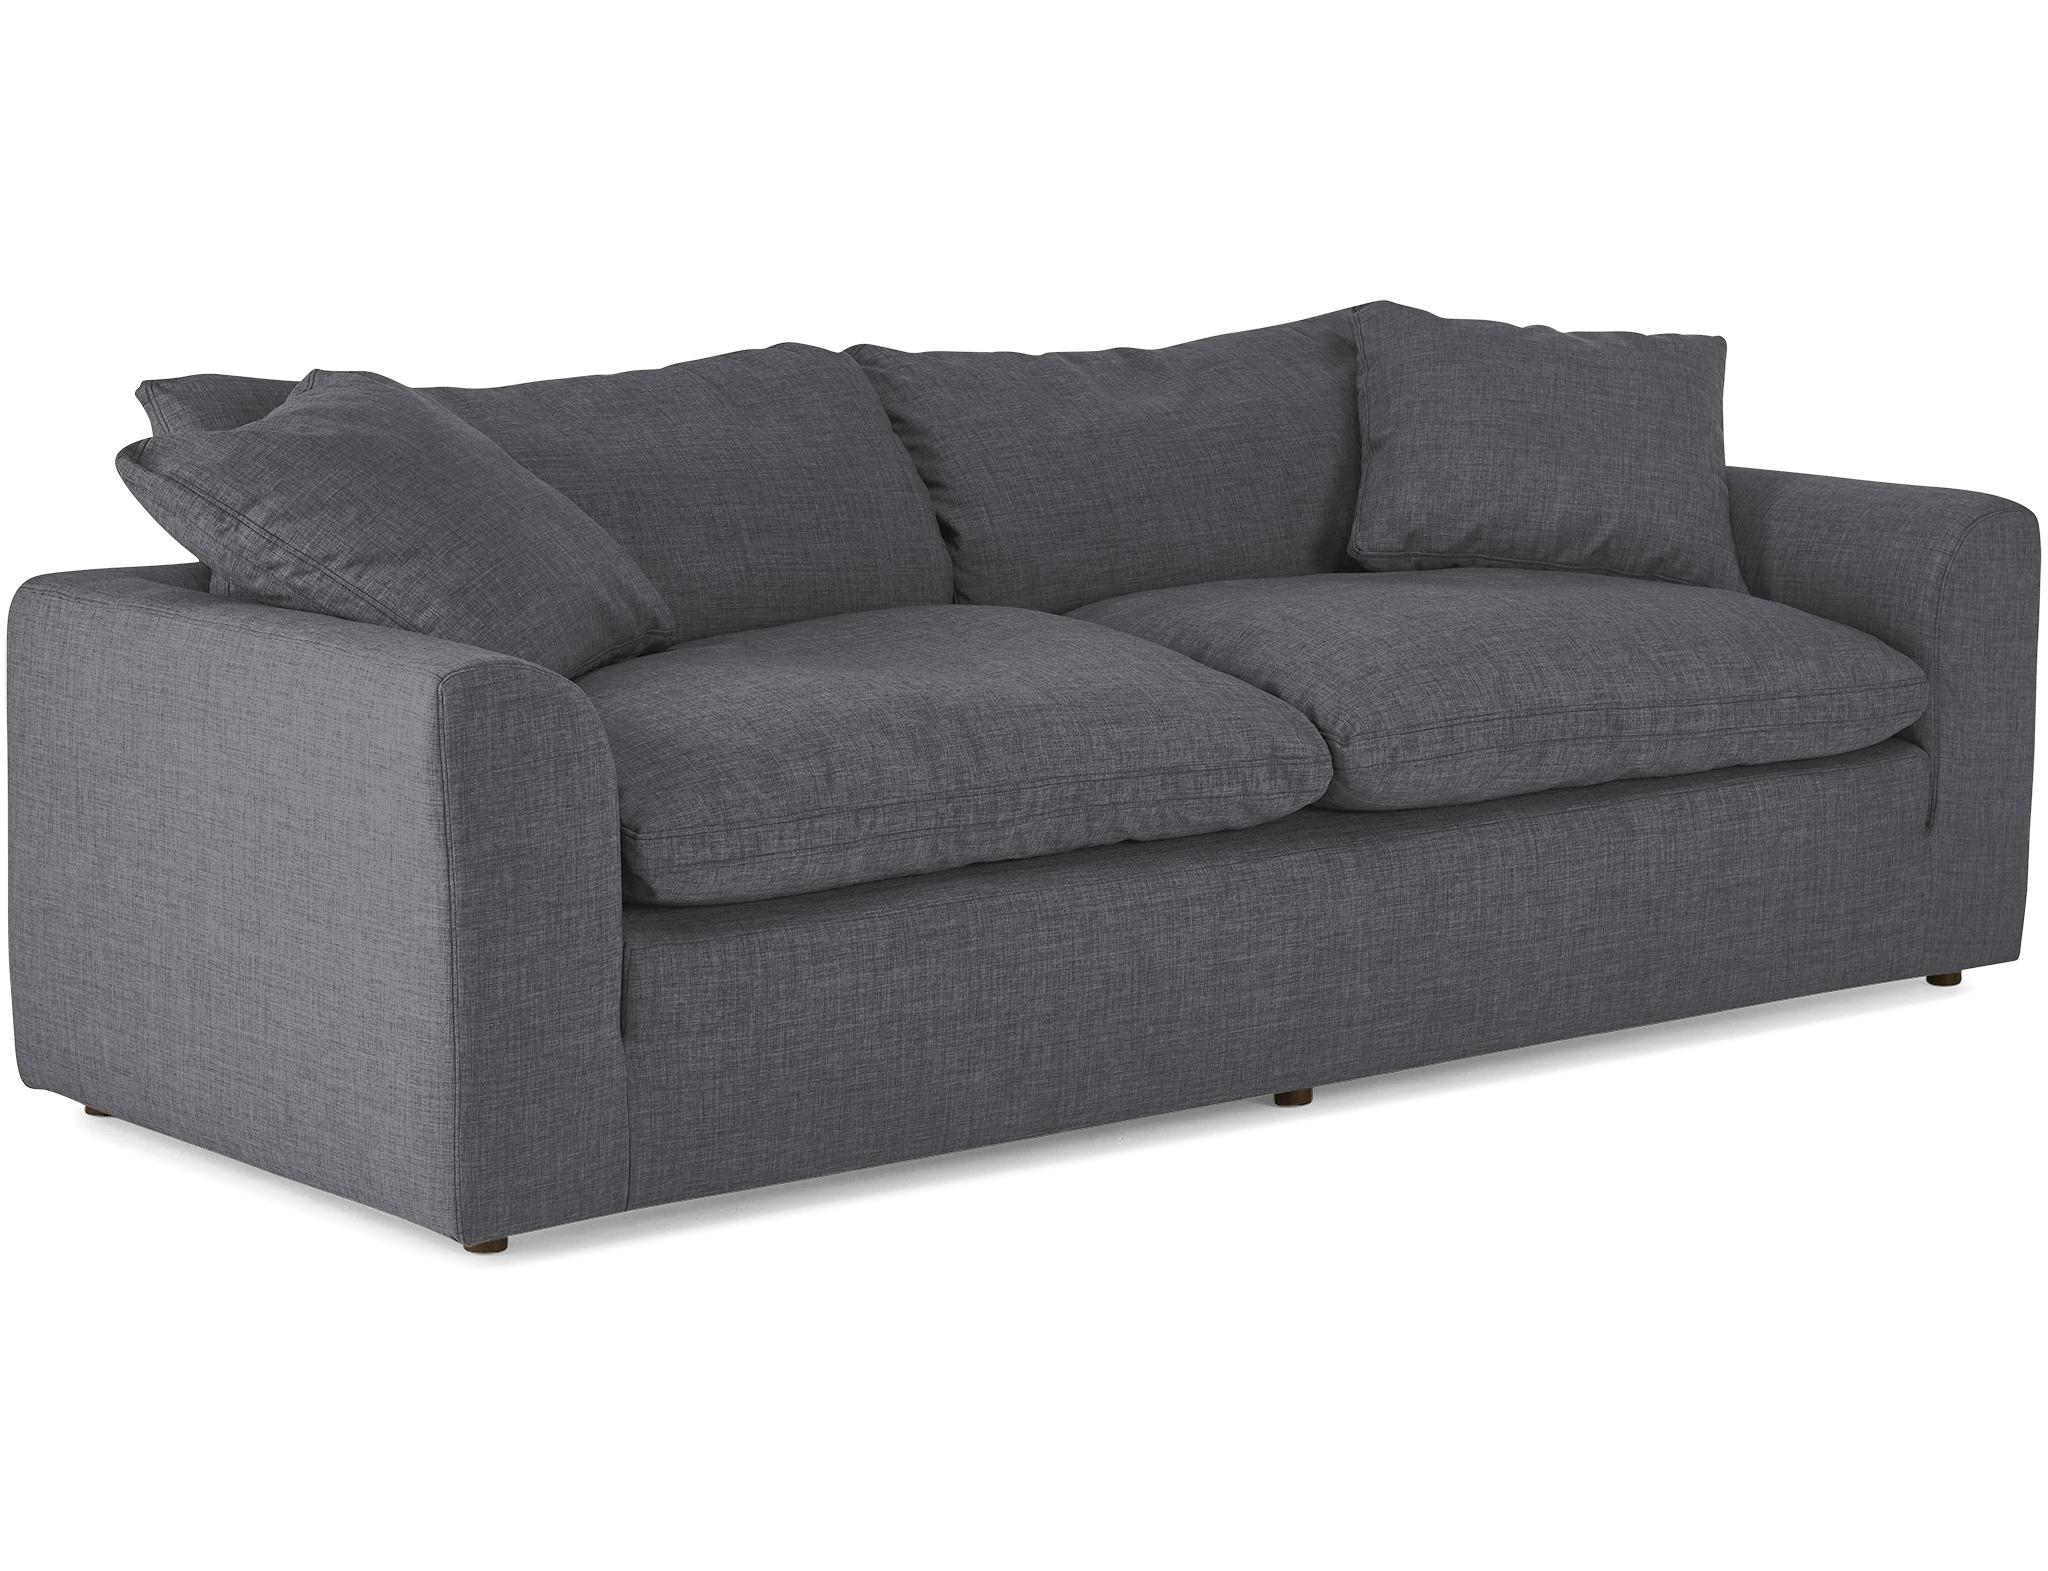 Gray Bryant Mid Century Modern Sofa - Essence Ash - Image 1